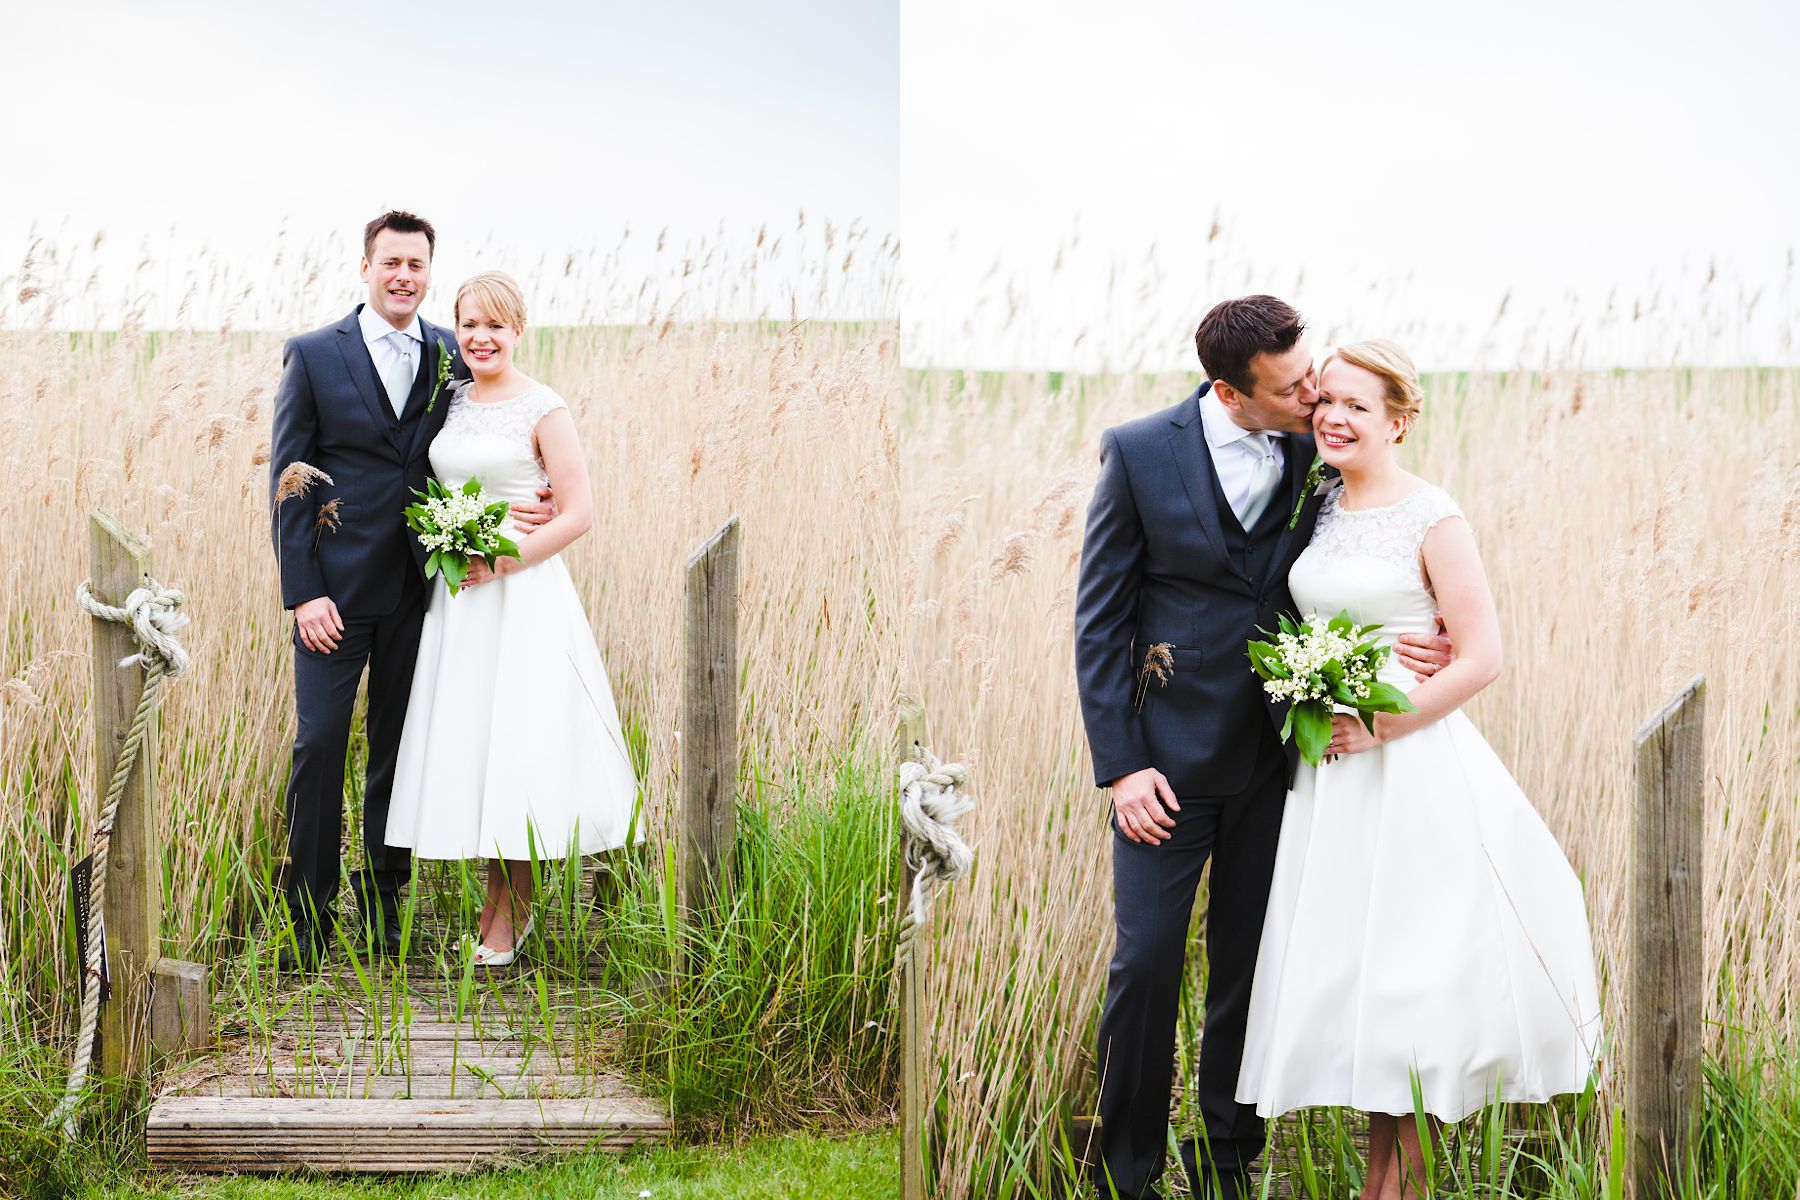 Cley windmill_North Norfolk, Norwich_wedding photography_small intimate wedding venues_windmill wedding_seaside wedding (17)